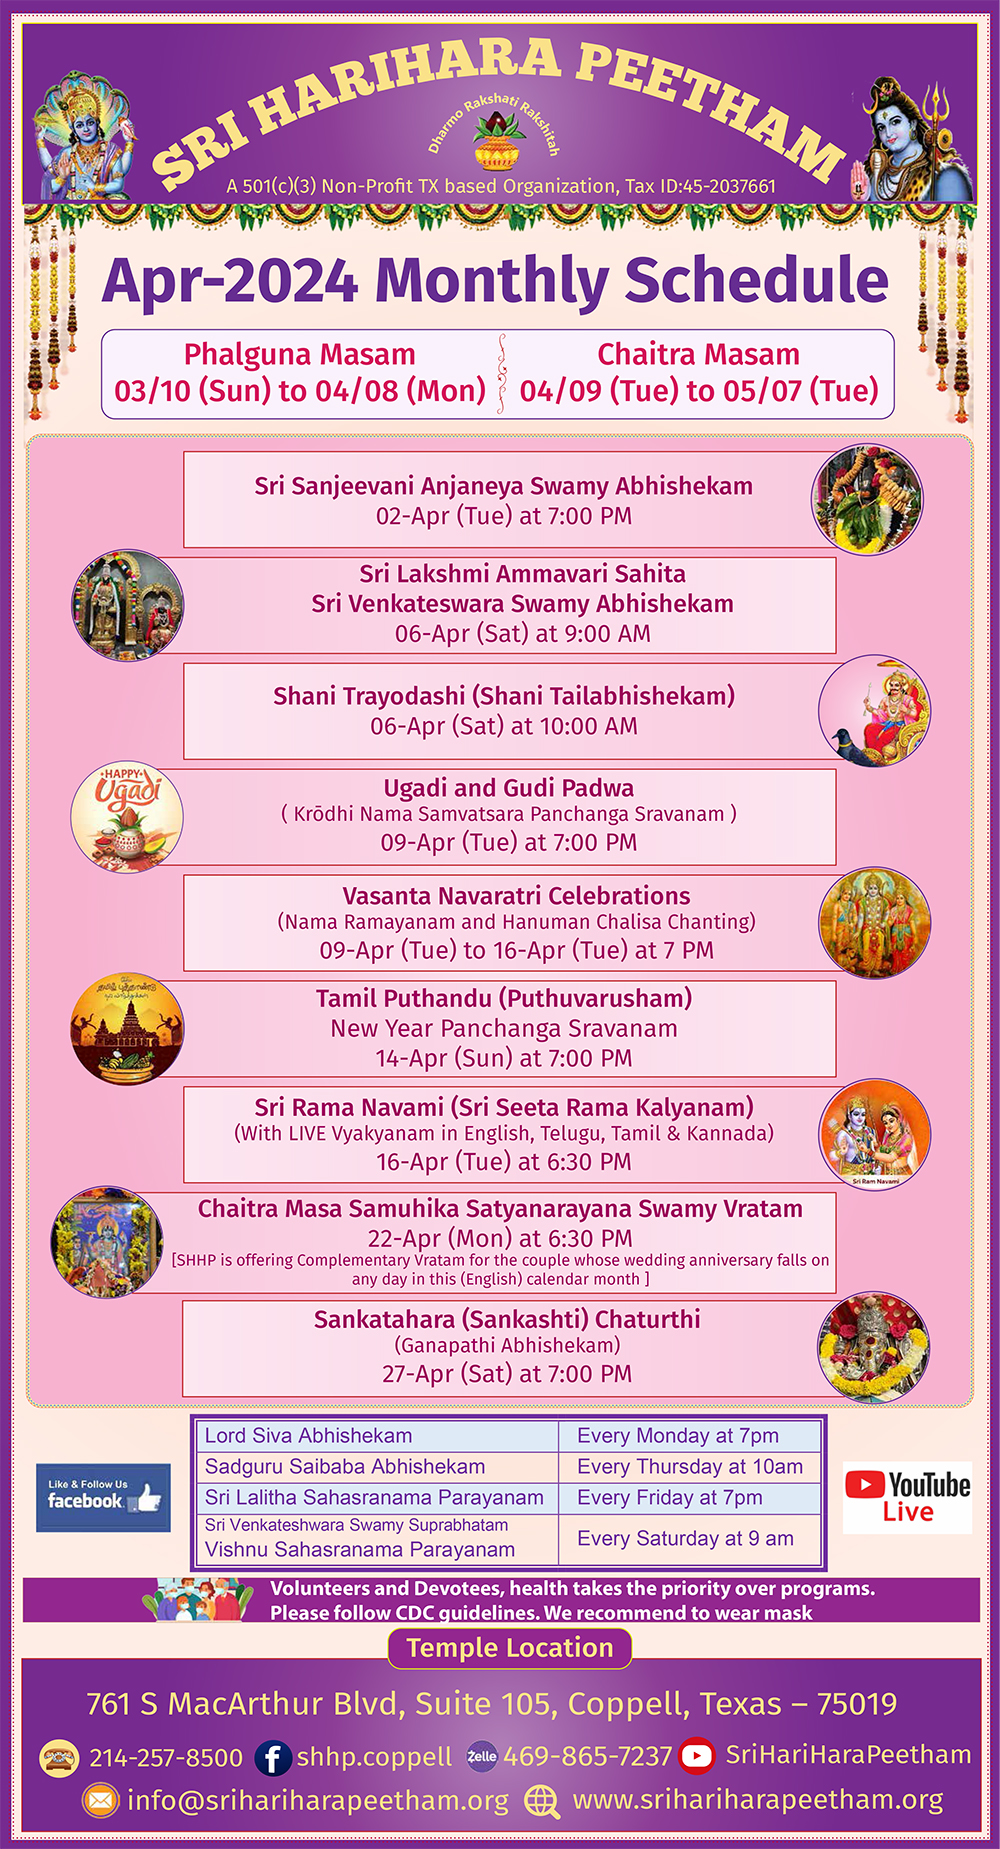 Sri HariHara Peetham April 2024 monthly schedule flyer